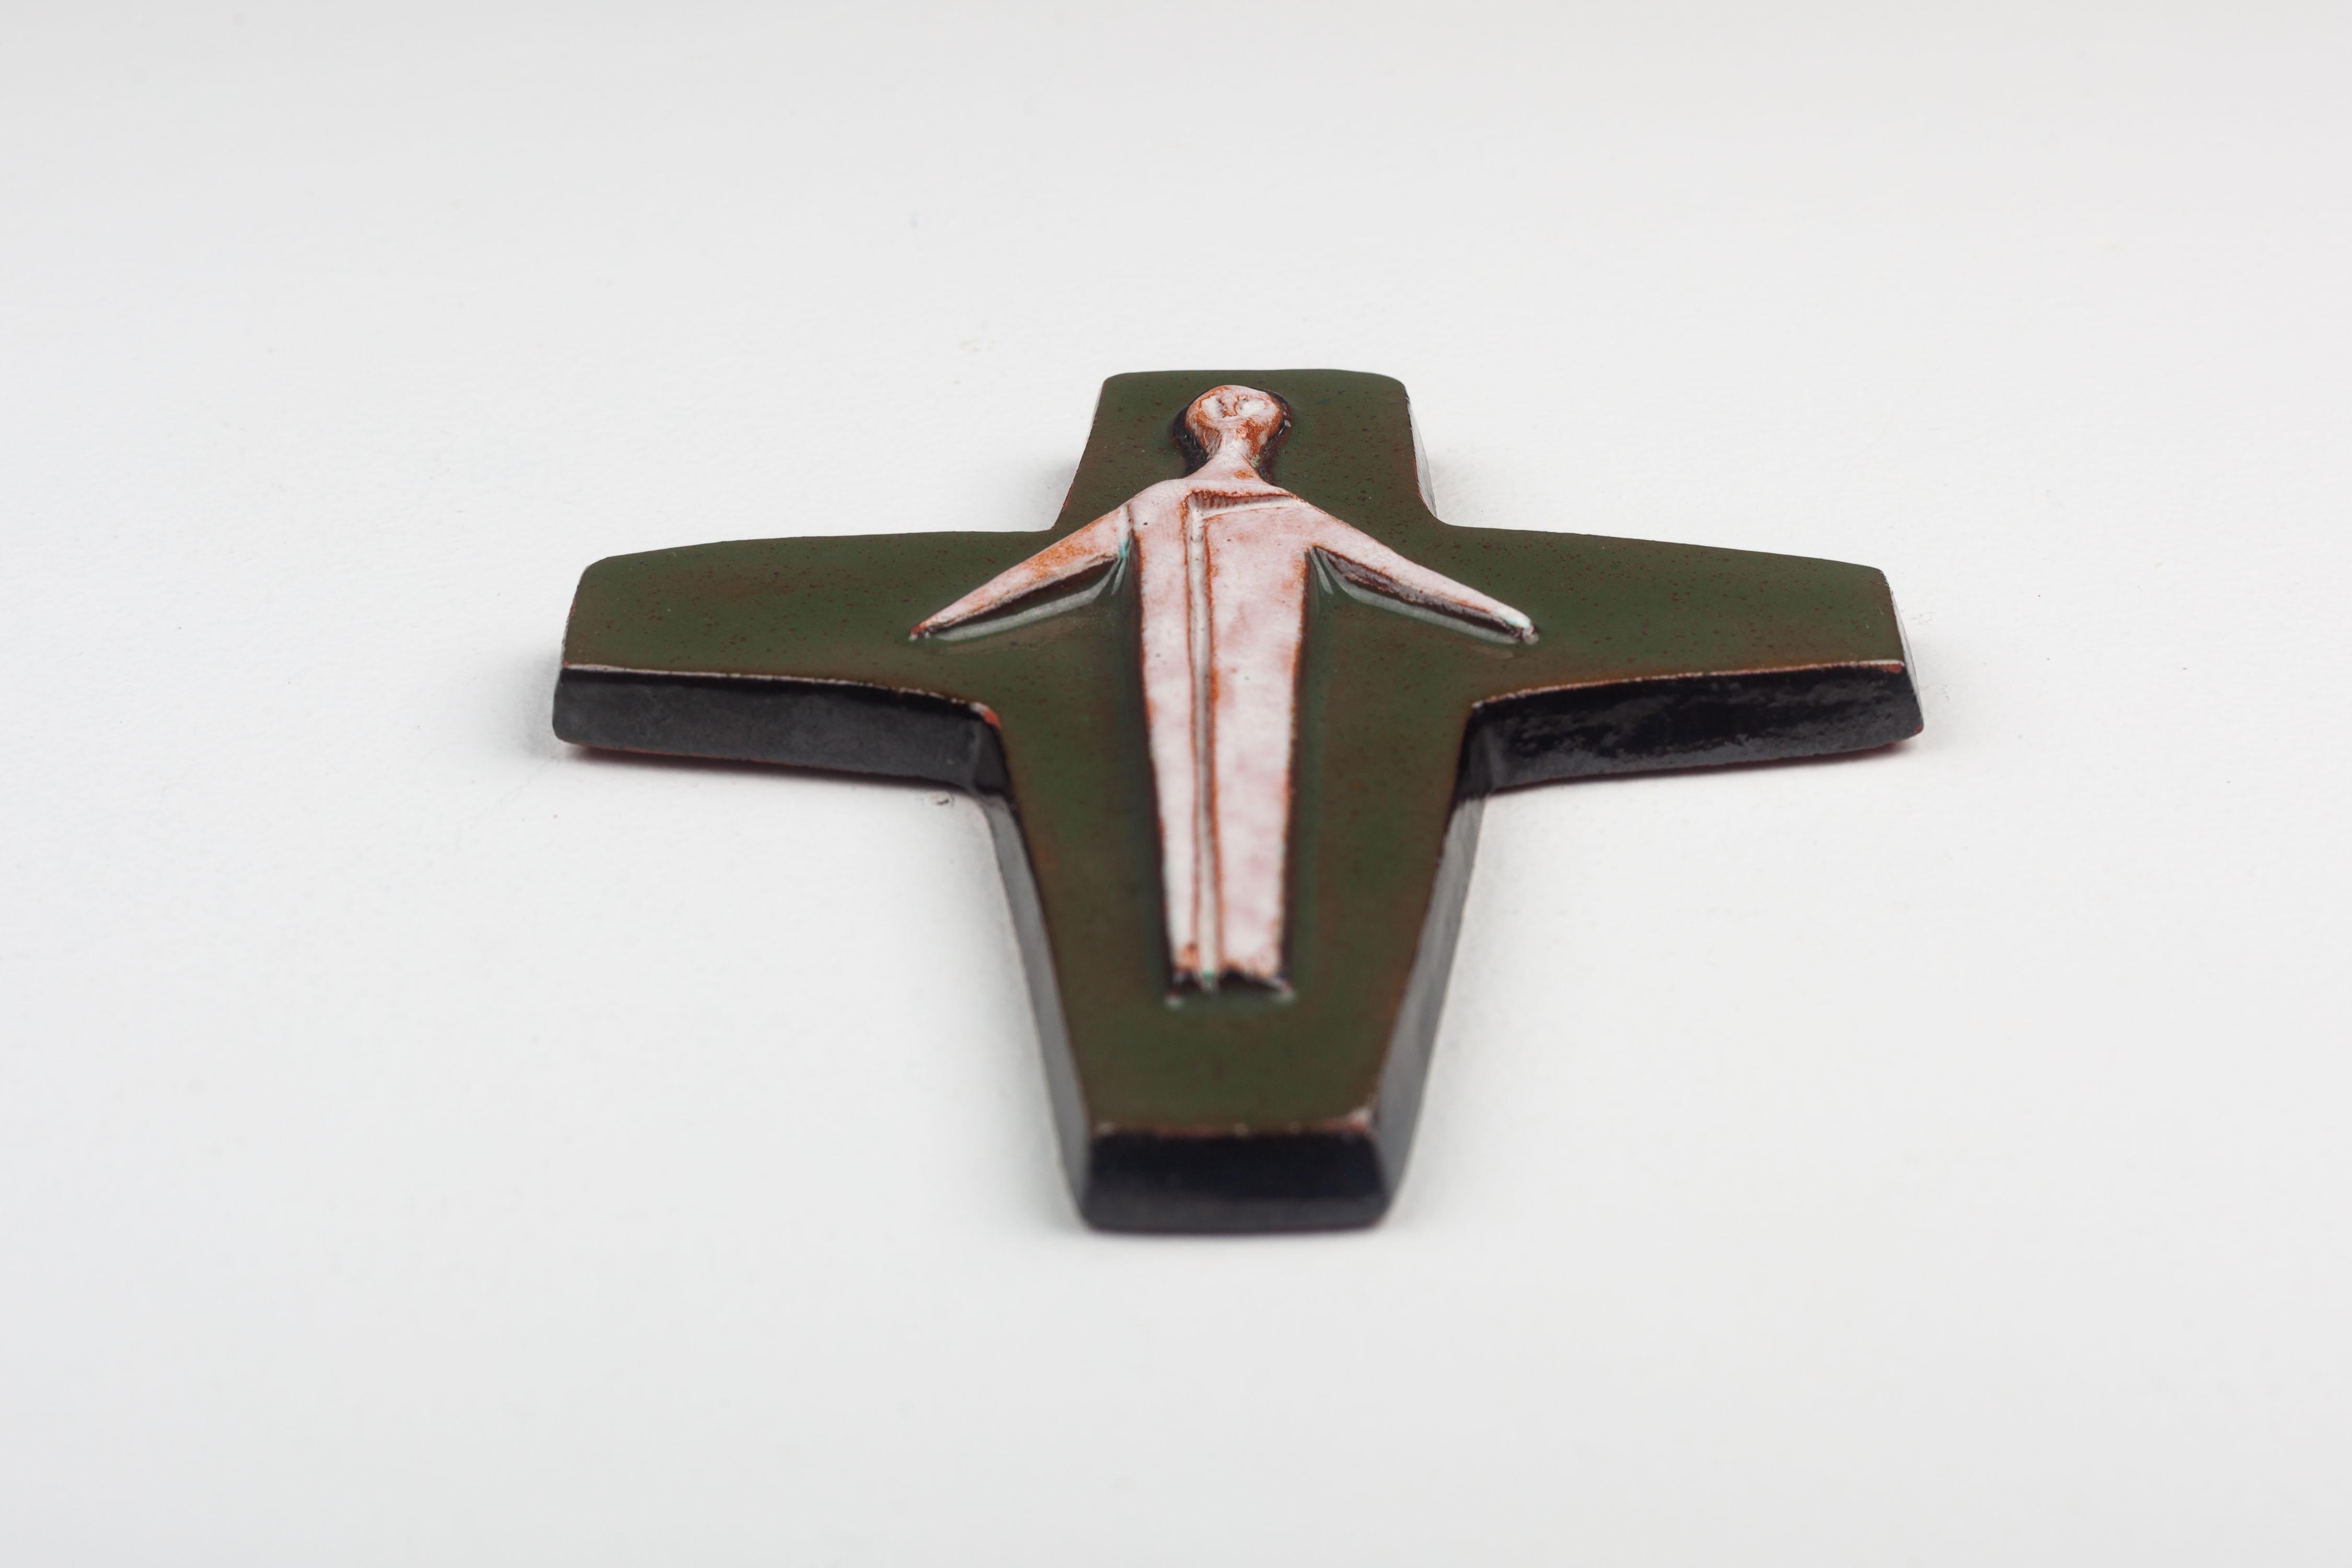 Midcentury European Glossy Ceramic Cross - Otherworldly Christ Figure For Sale 4